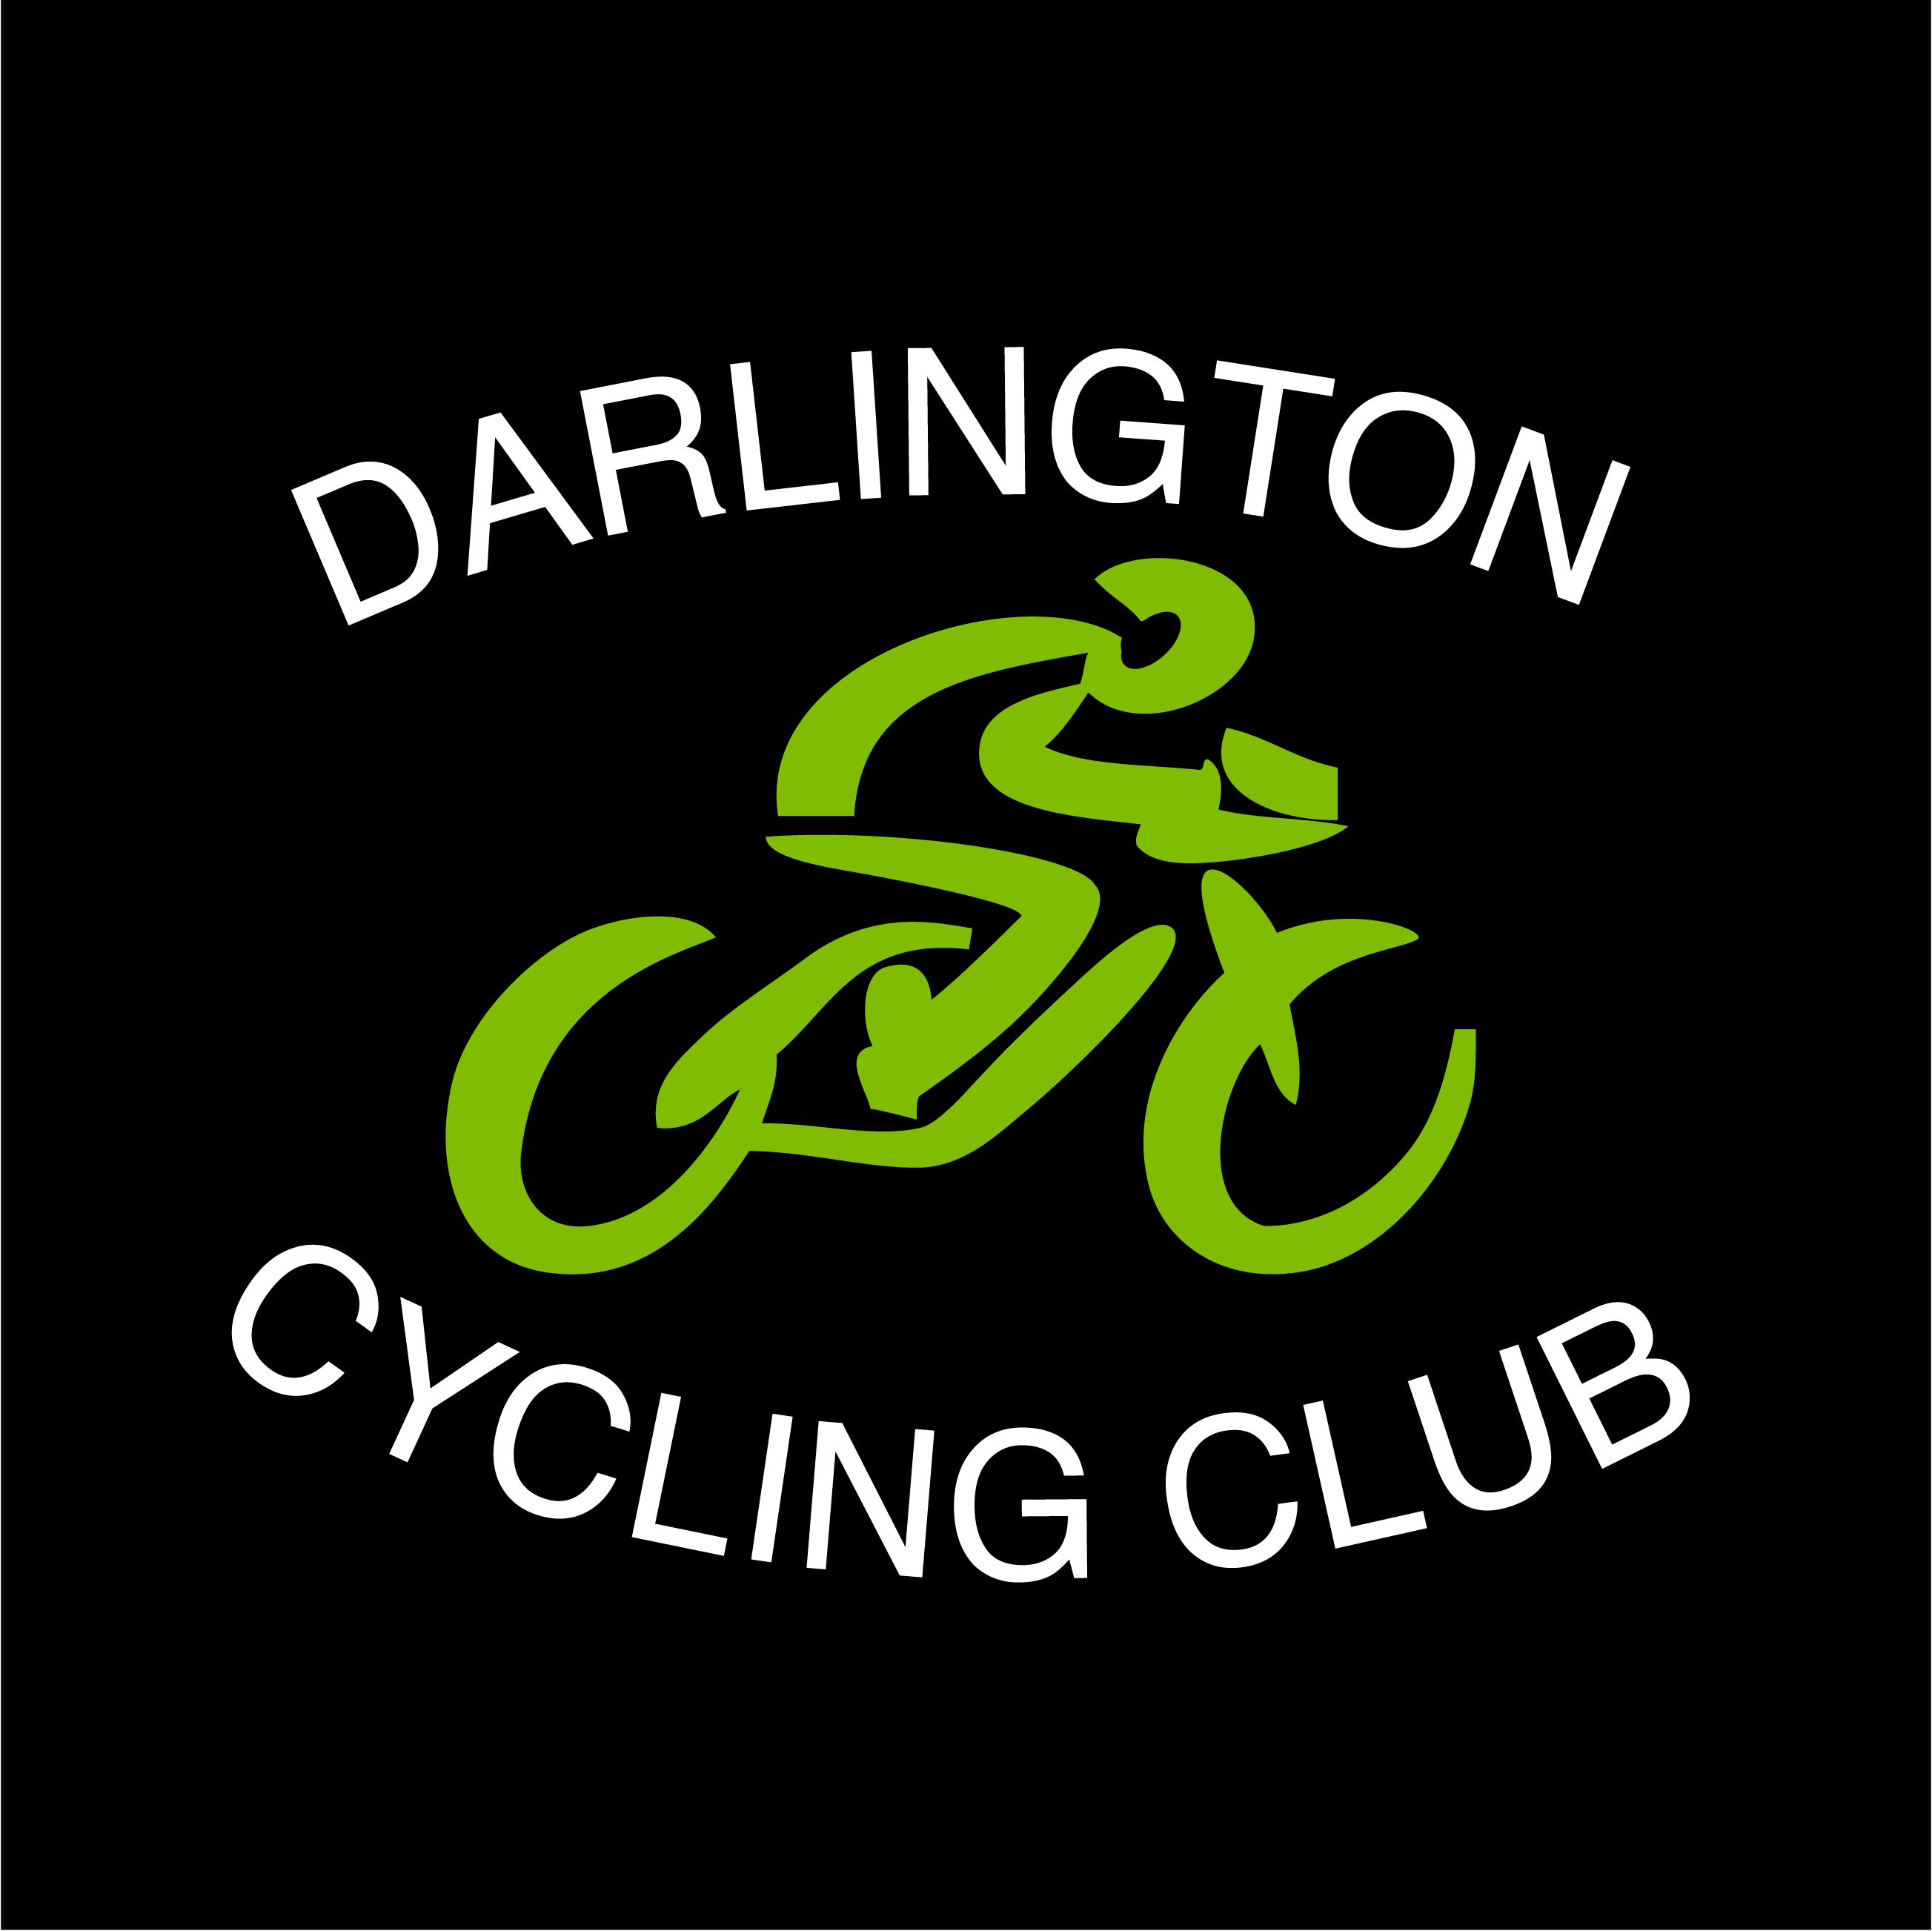 Club Image for DARLINGTON CC